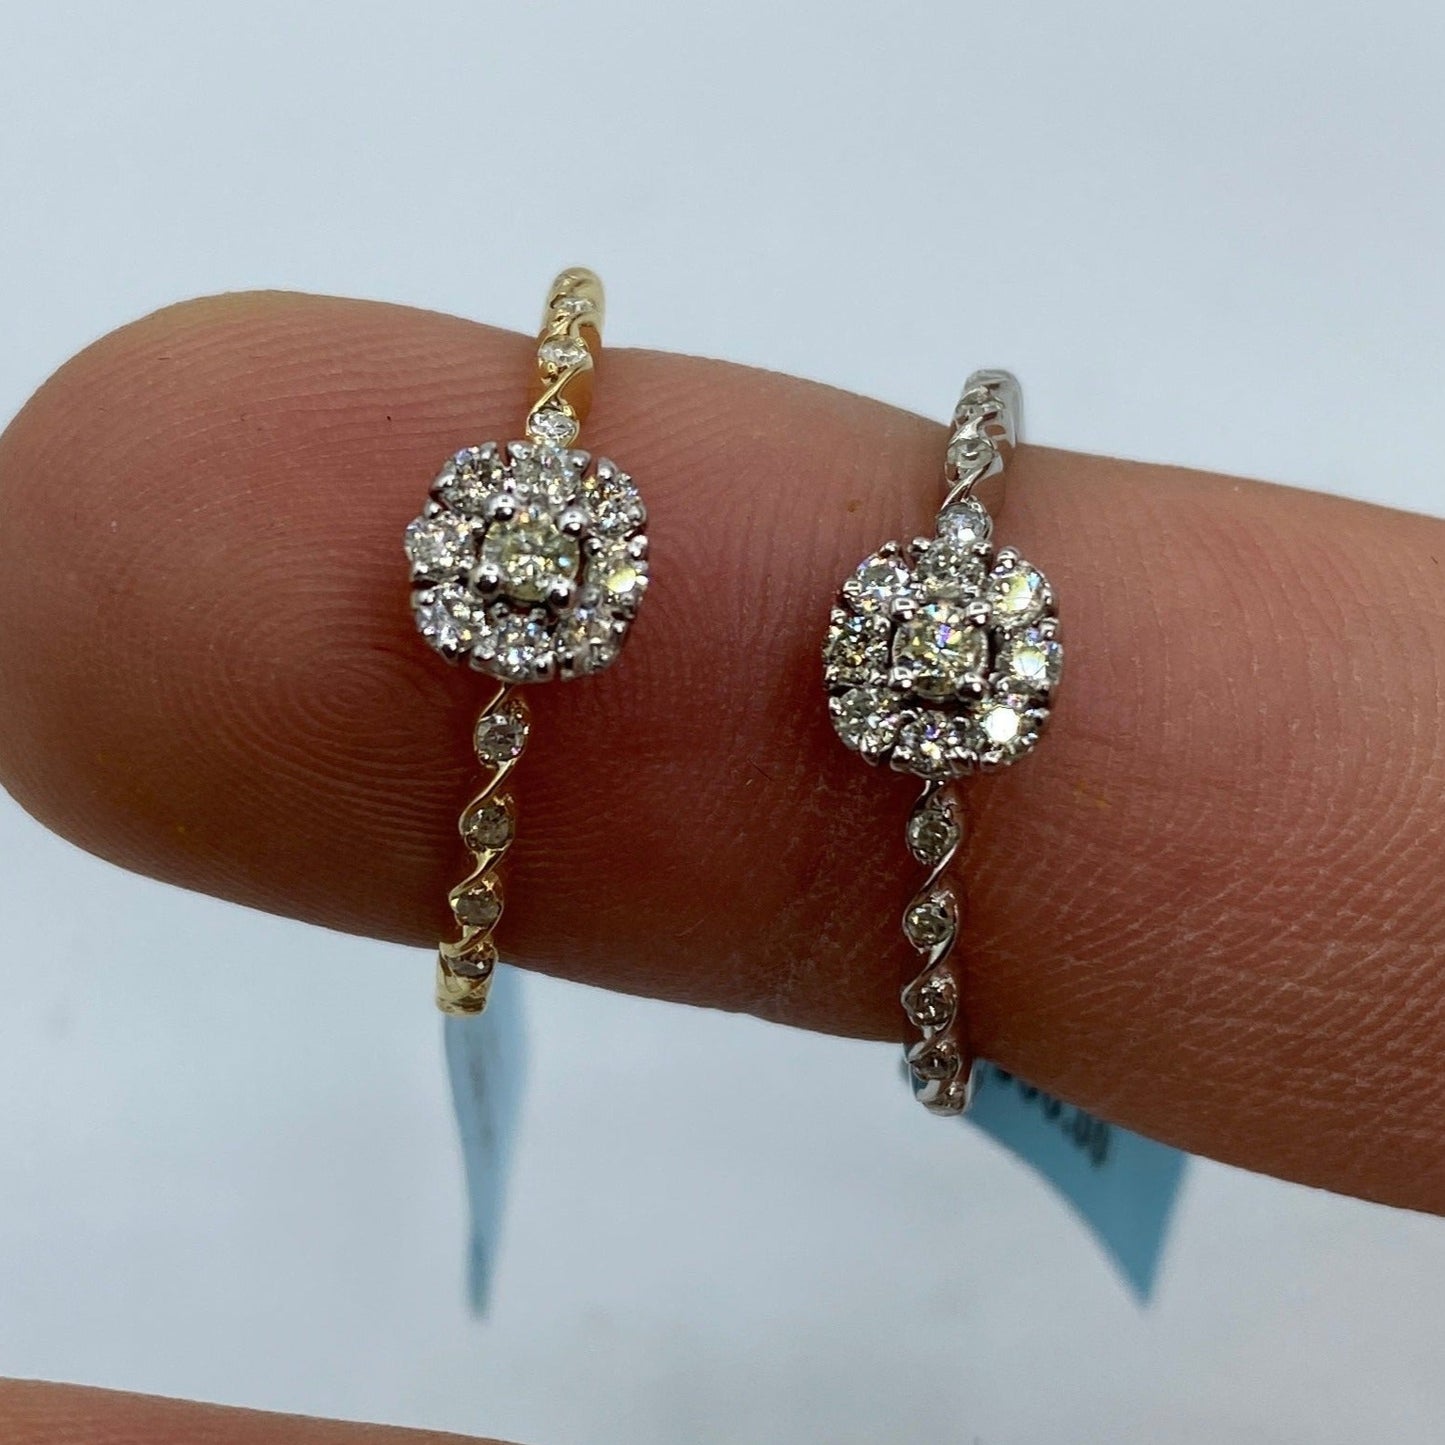 14K Elegant Bloom Diamond Engagement Ring